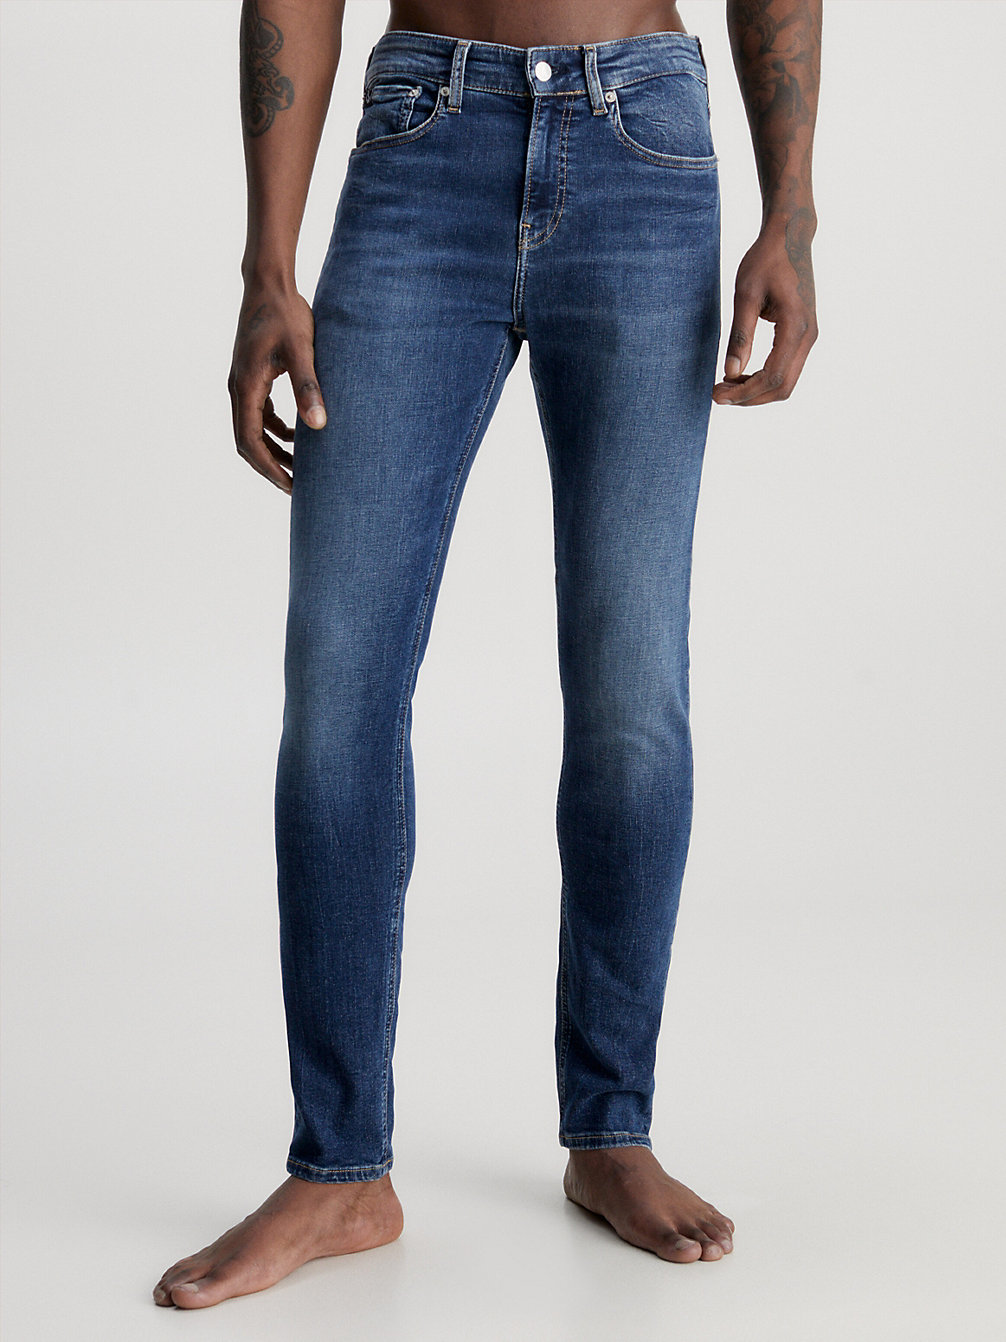 Jeans Con Ajuste Skinny > DENIM DARK > undefined hombre > Calvin Klein